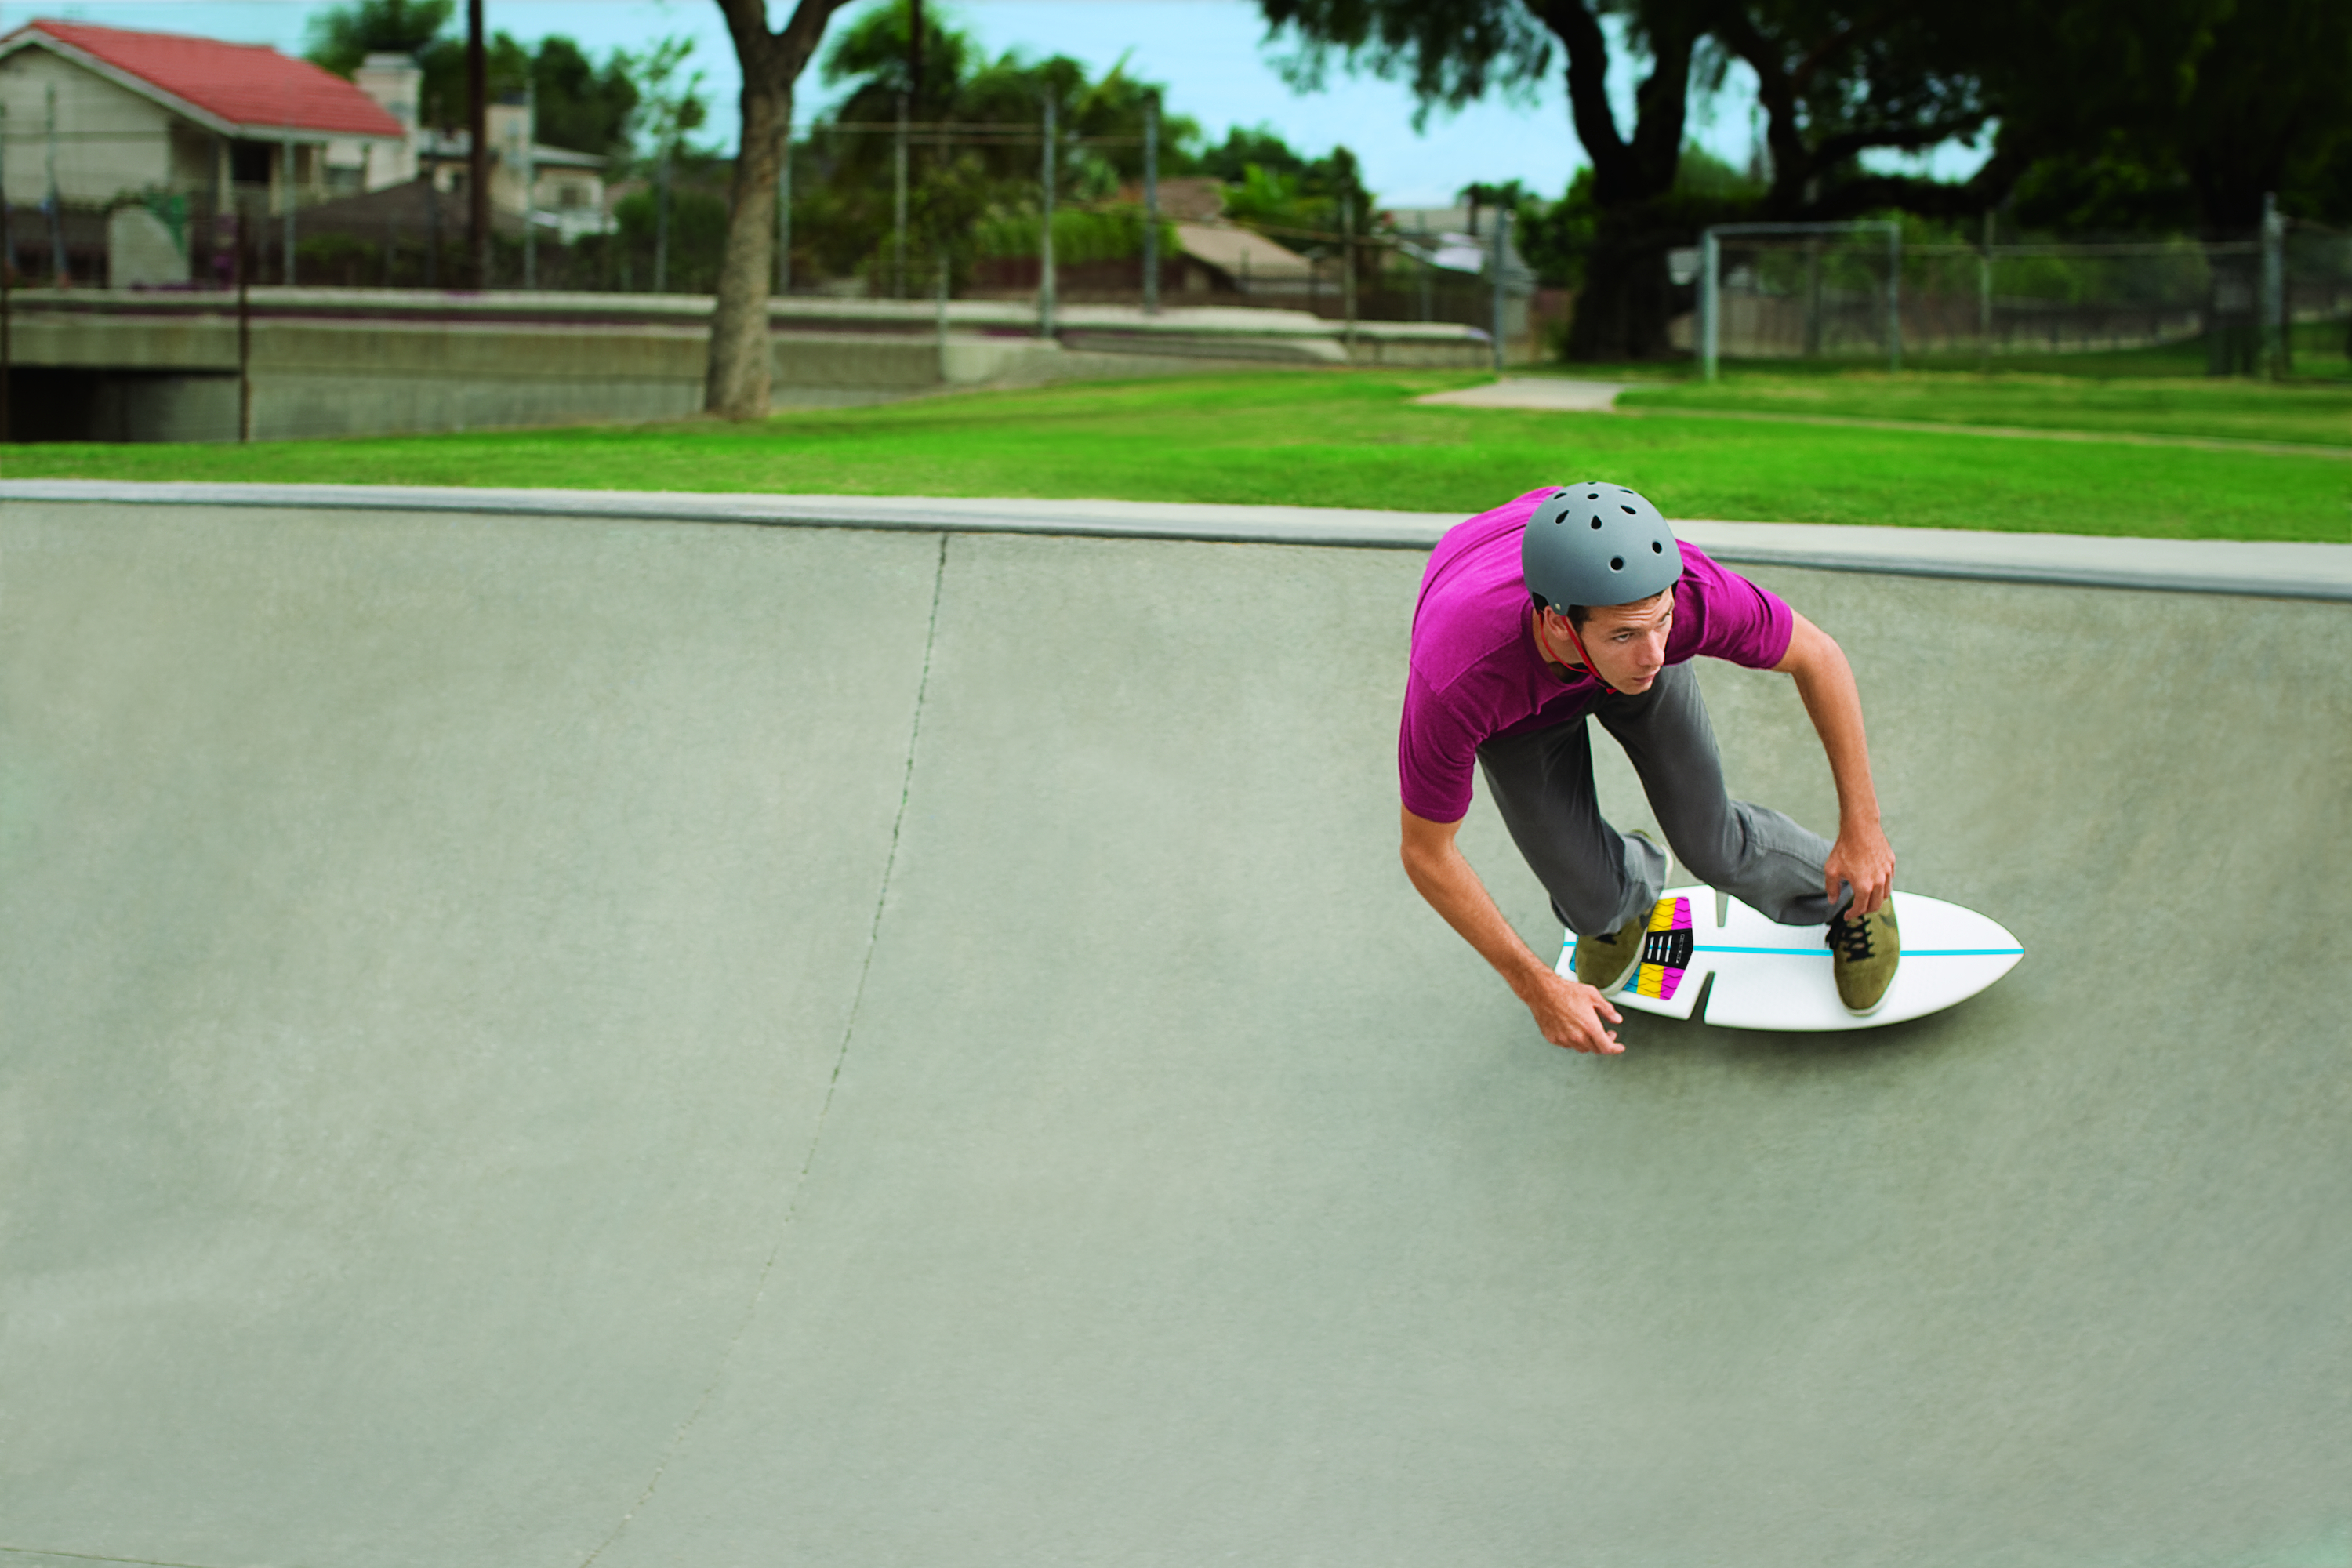 Razor RipSurf Caster Board - Multicolor, 76mm 360-Degree Pivoting Skateboard, for Child, Teen, Adult - image 2 of 8